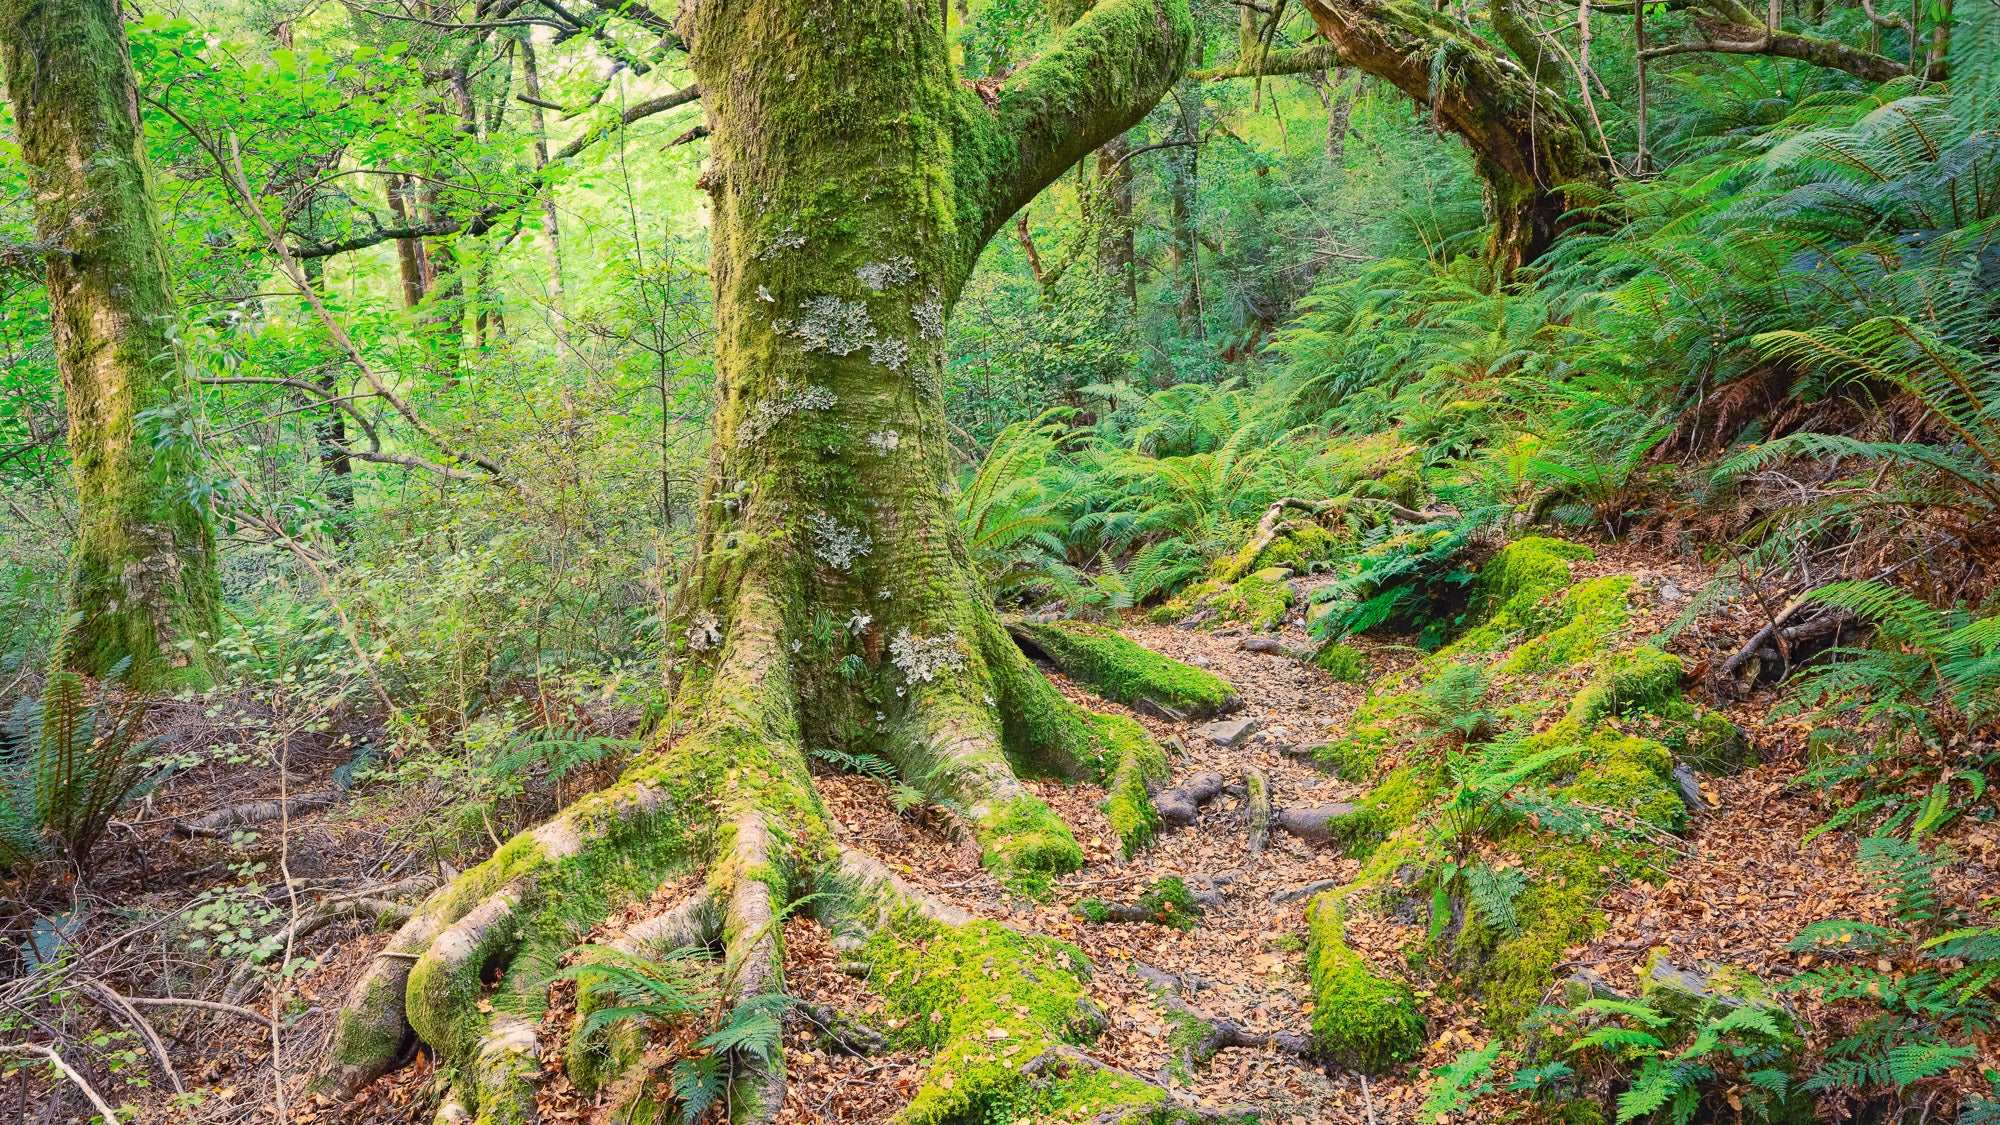 Enchanted Forest Path - Mt. Aspiring National Park - by Award Winning New Zealand Landscape Photographer Stephen Milner